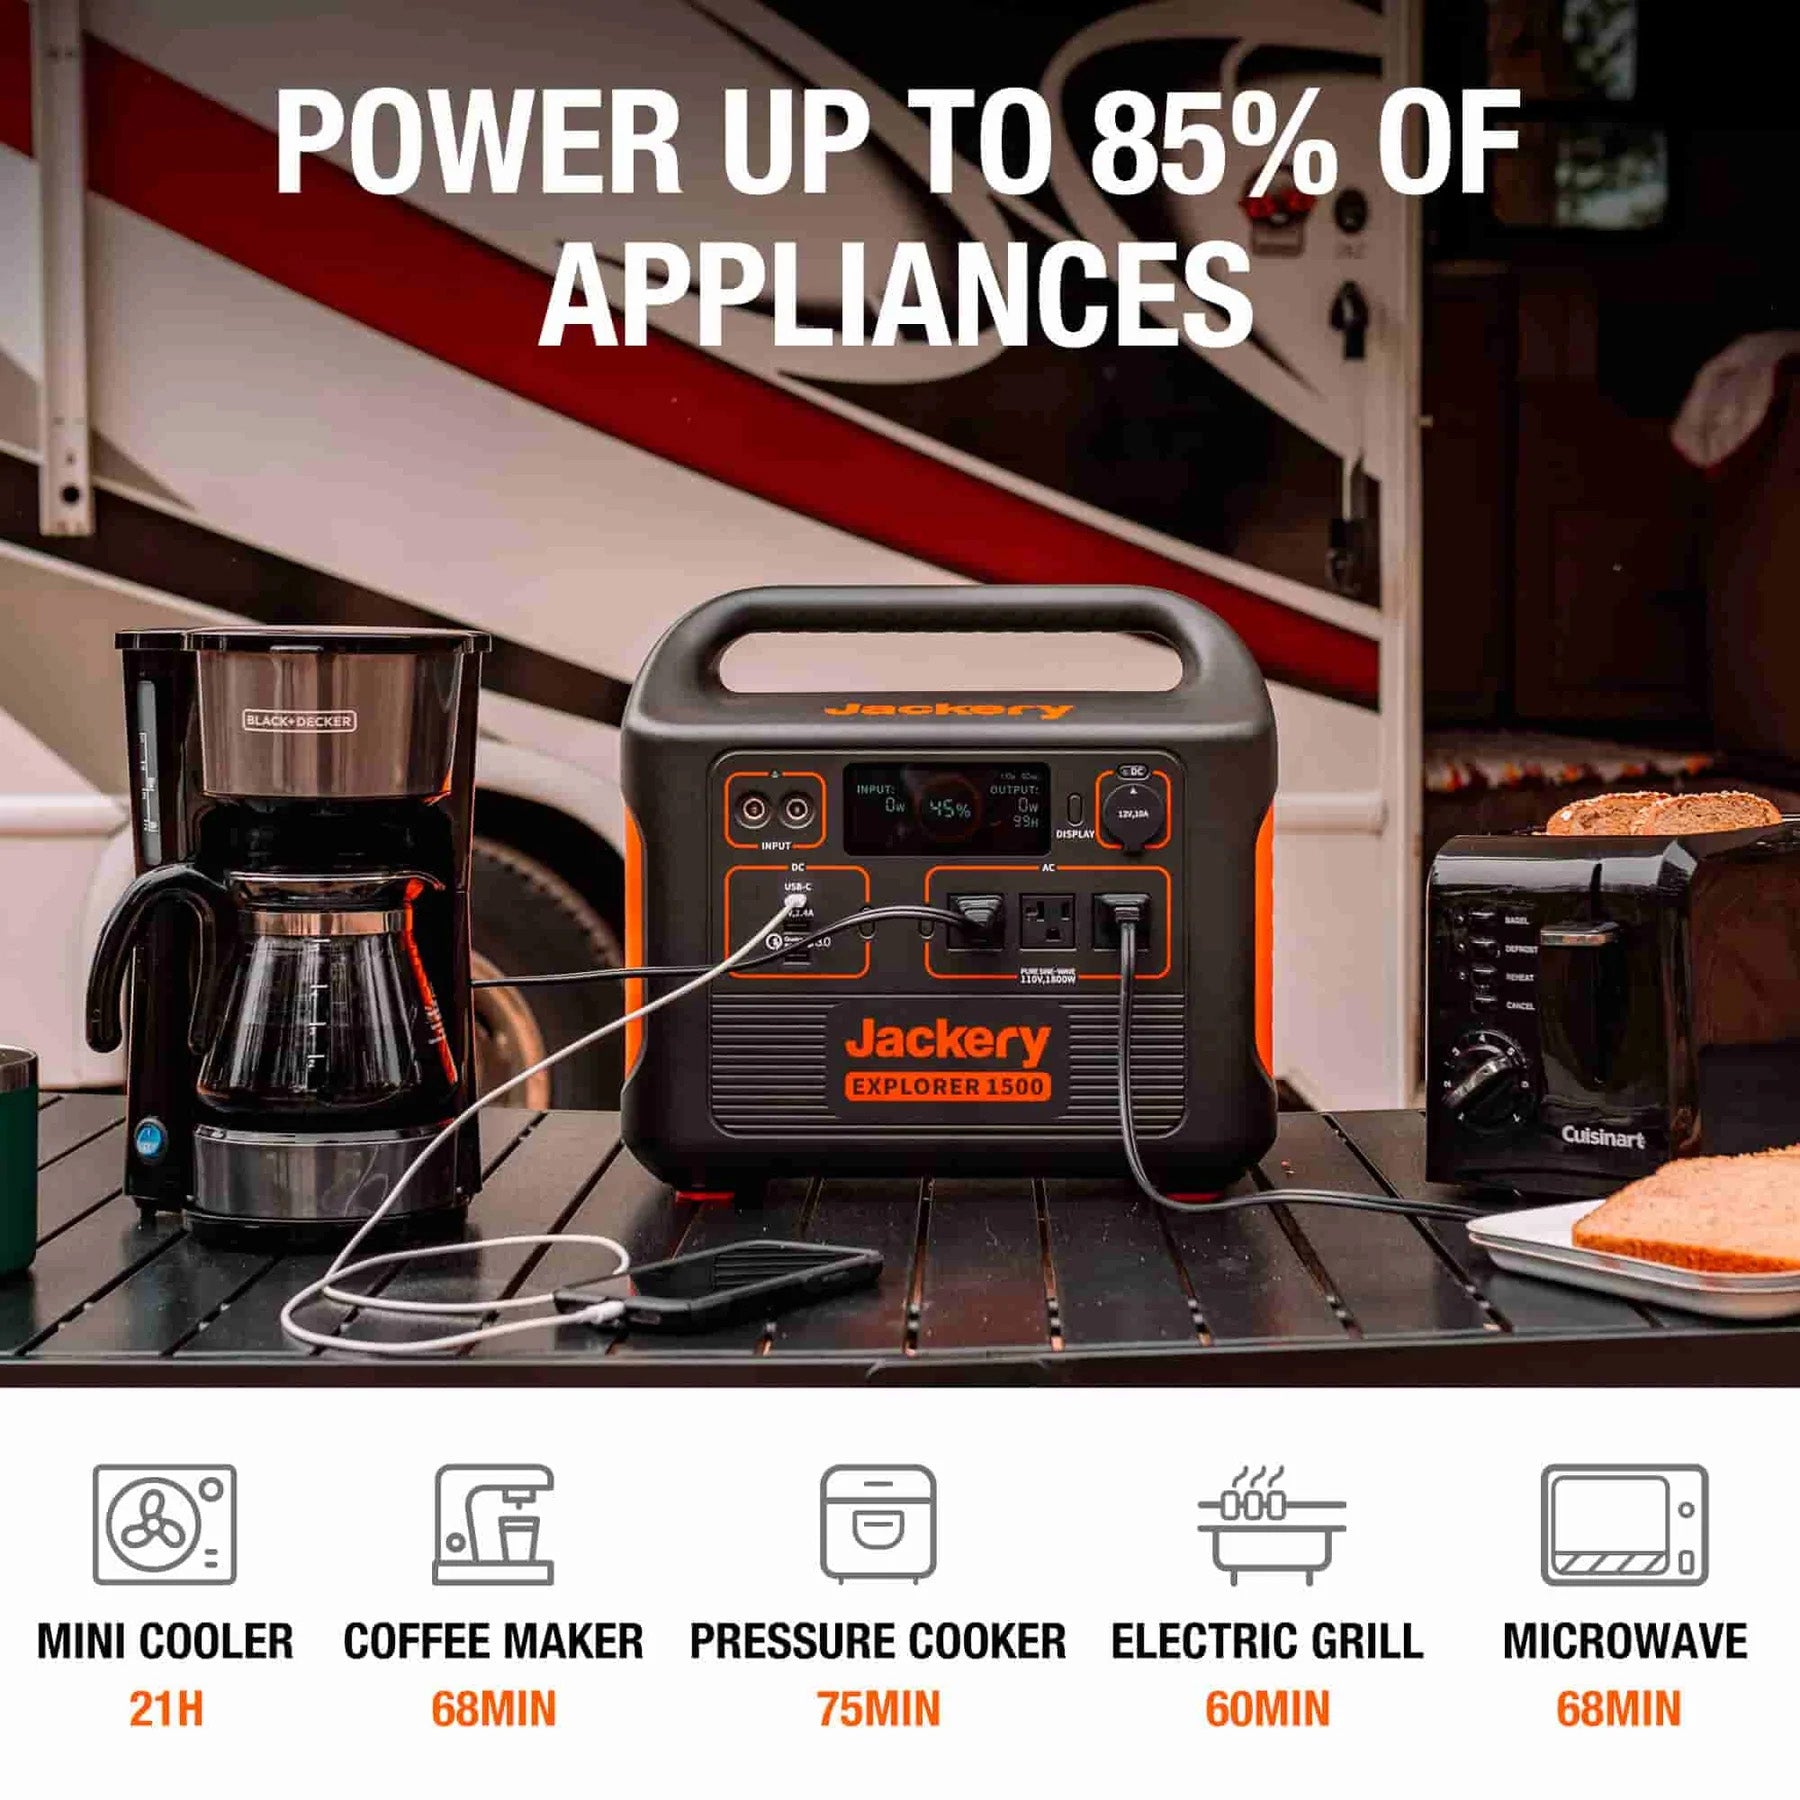 Jackery Solar Generator 1500 - Power Up To 85% Of Appliances